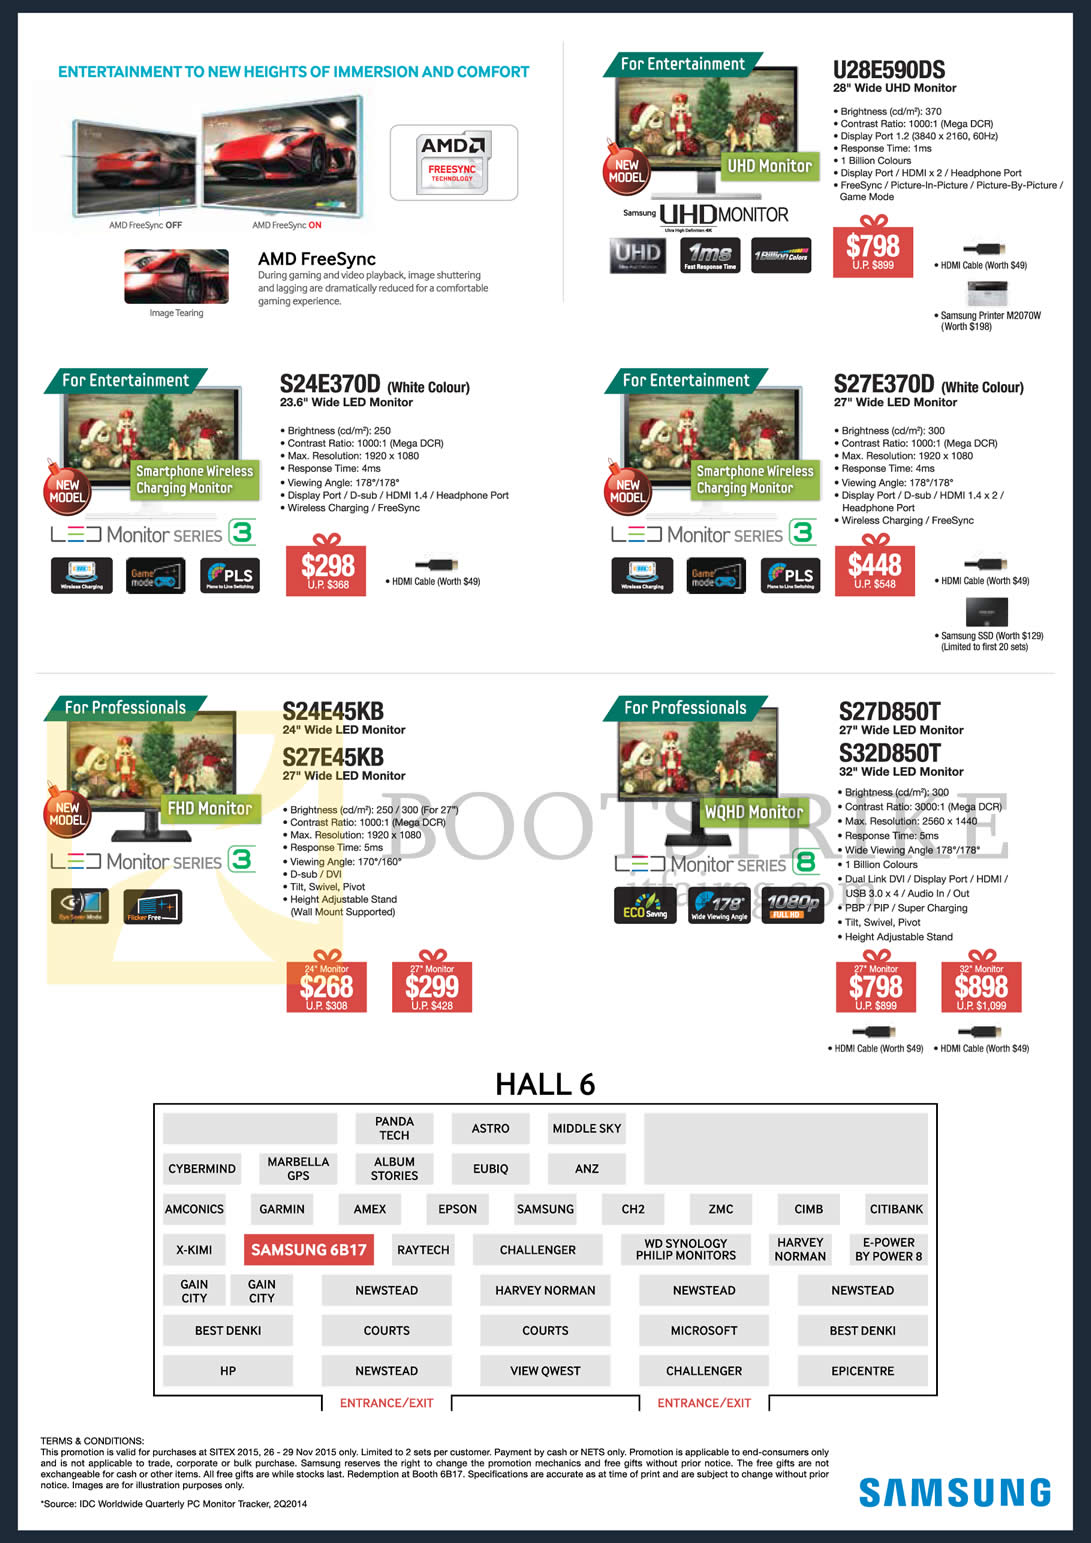 SITEX 2015 price list image brochure of Samsung Monitors LED S24E370D, S24E45KB, S27E45KB, U28E590DS, S27E370D, S27D850T, S32D850T